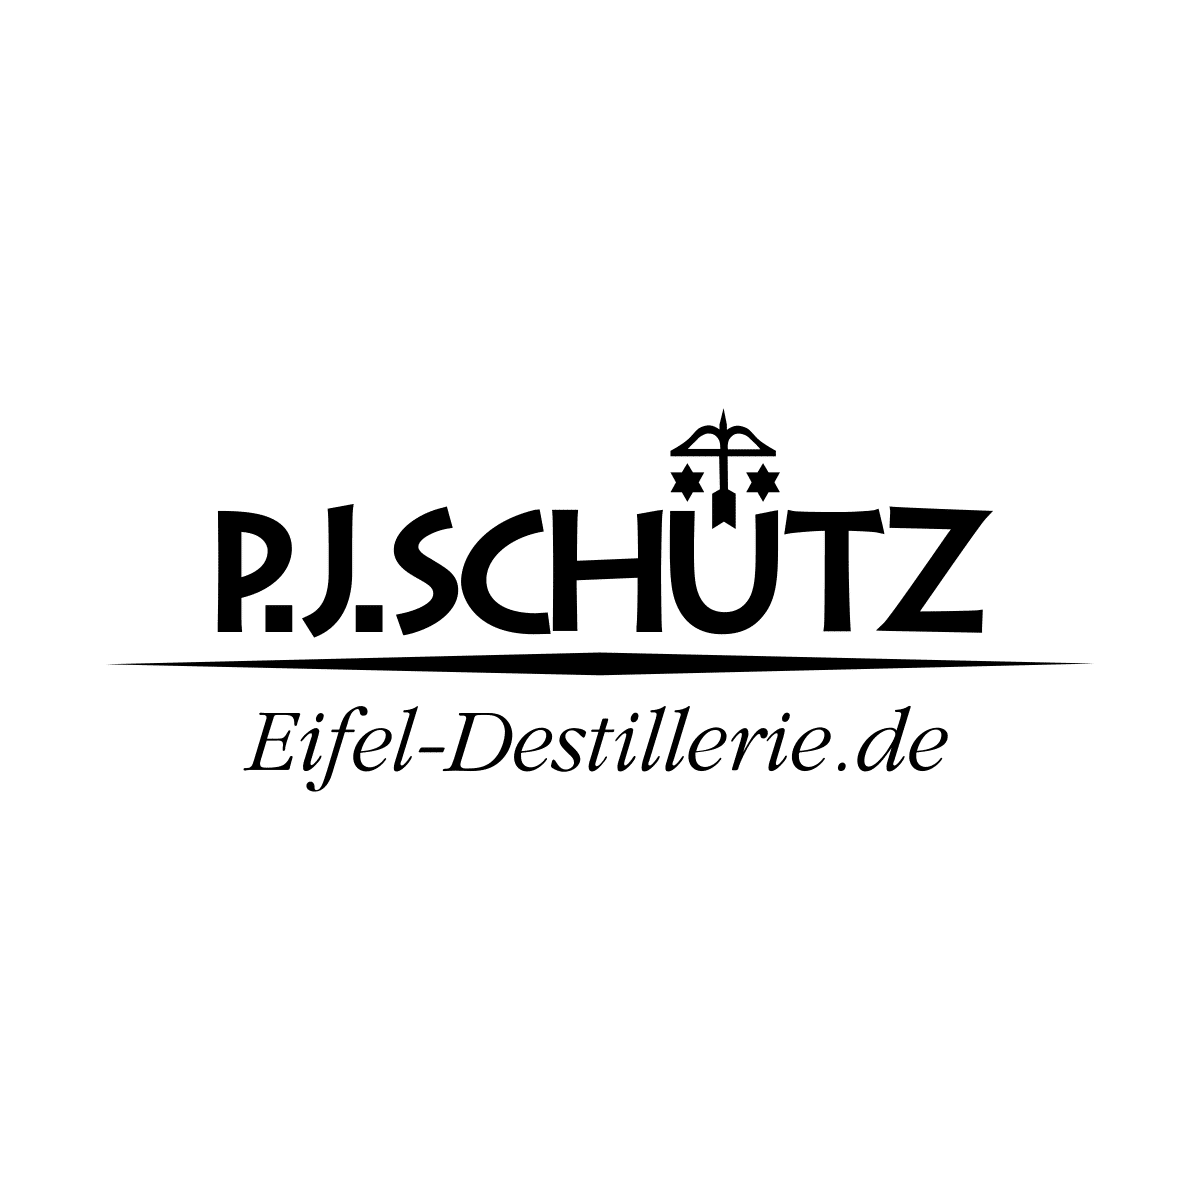 PJ Schütz Eifel Destillerie Logo